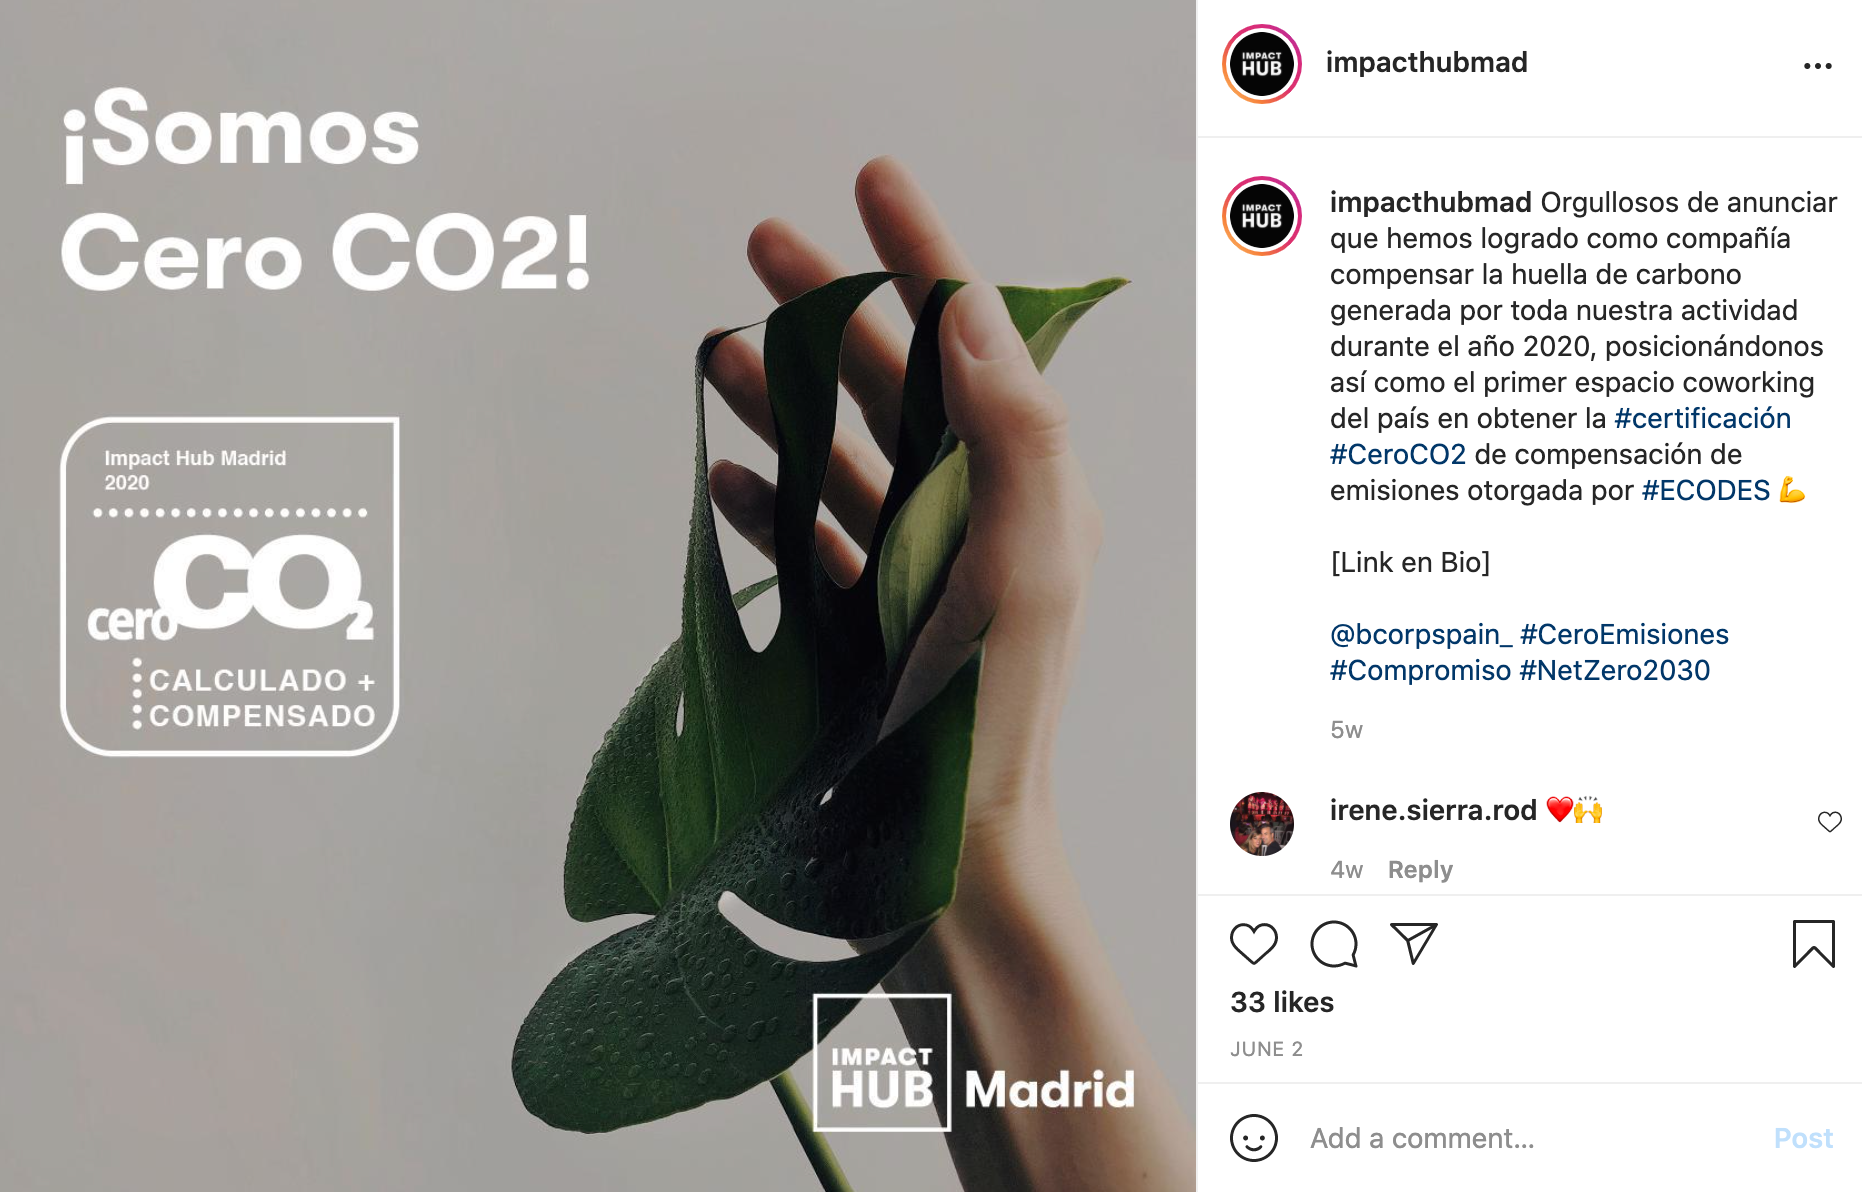 Instagram Post from Impact Hub Madrid